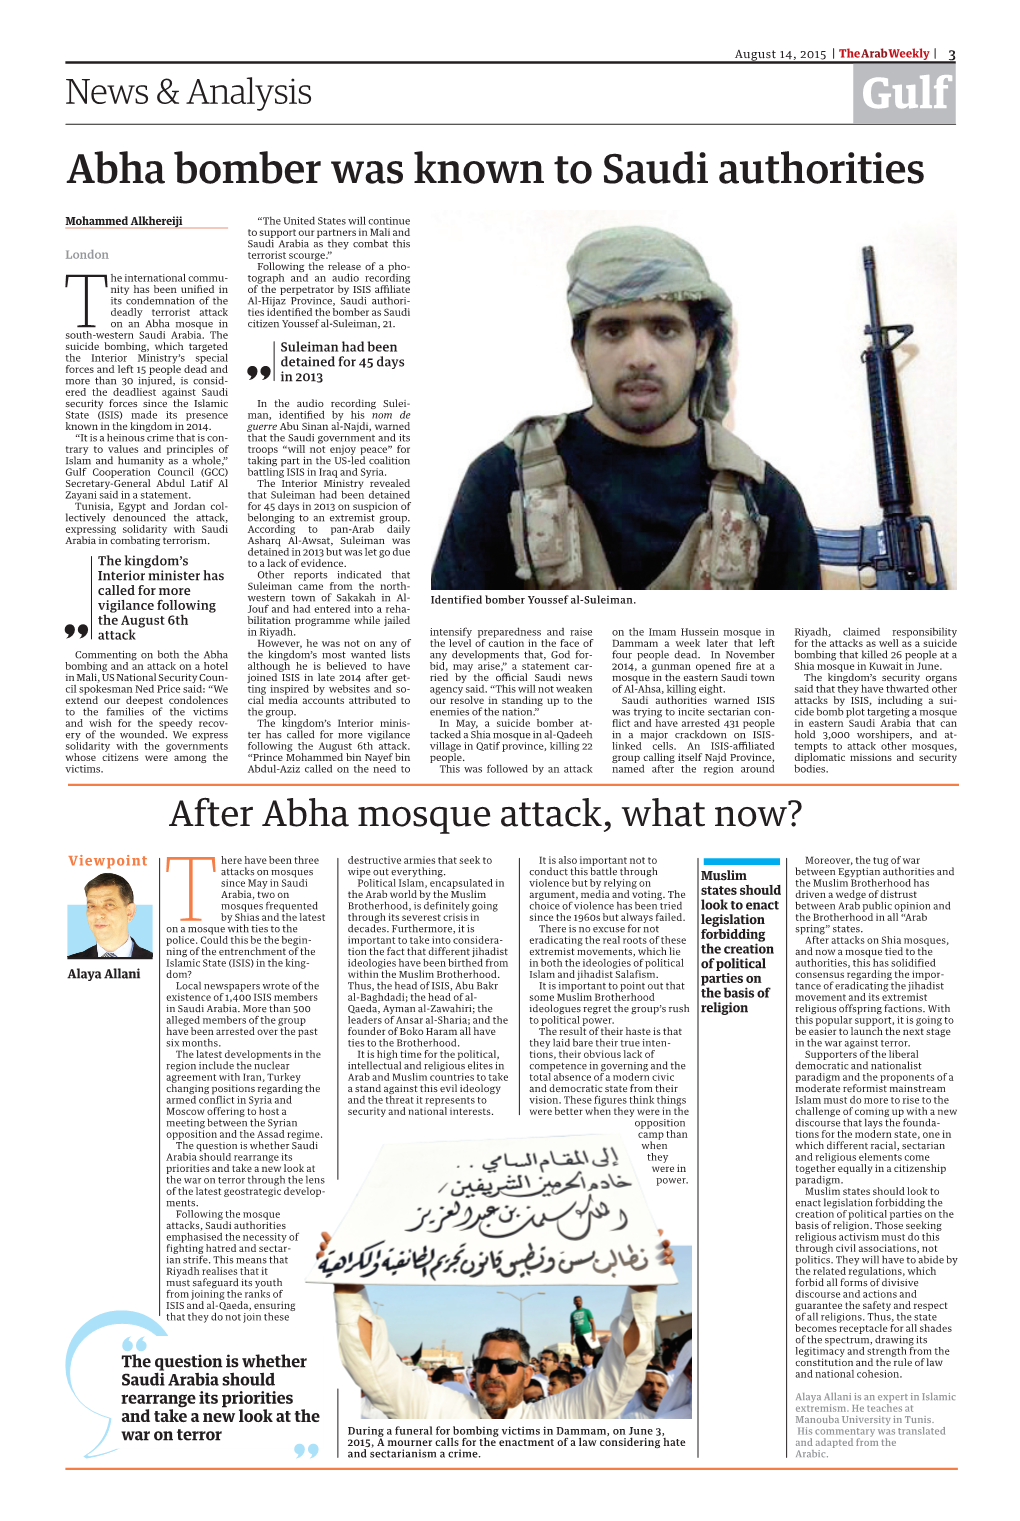 Abha Bomber Was Known to Saudi Authorities